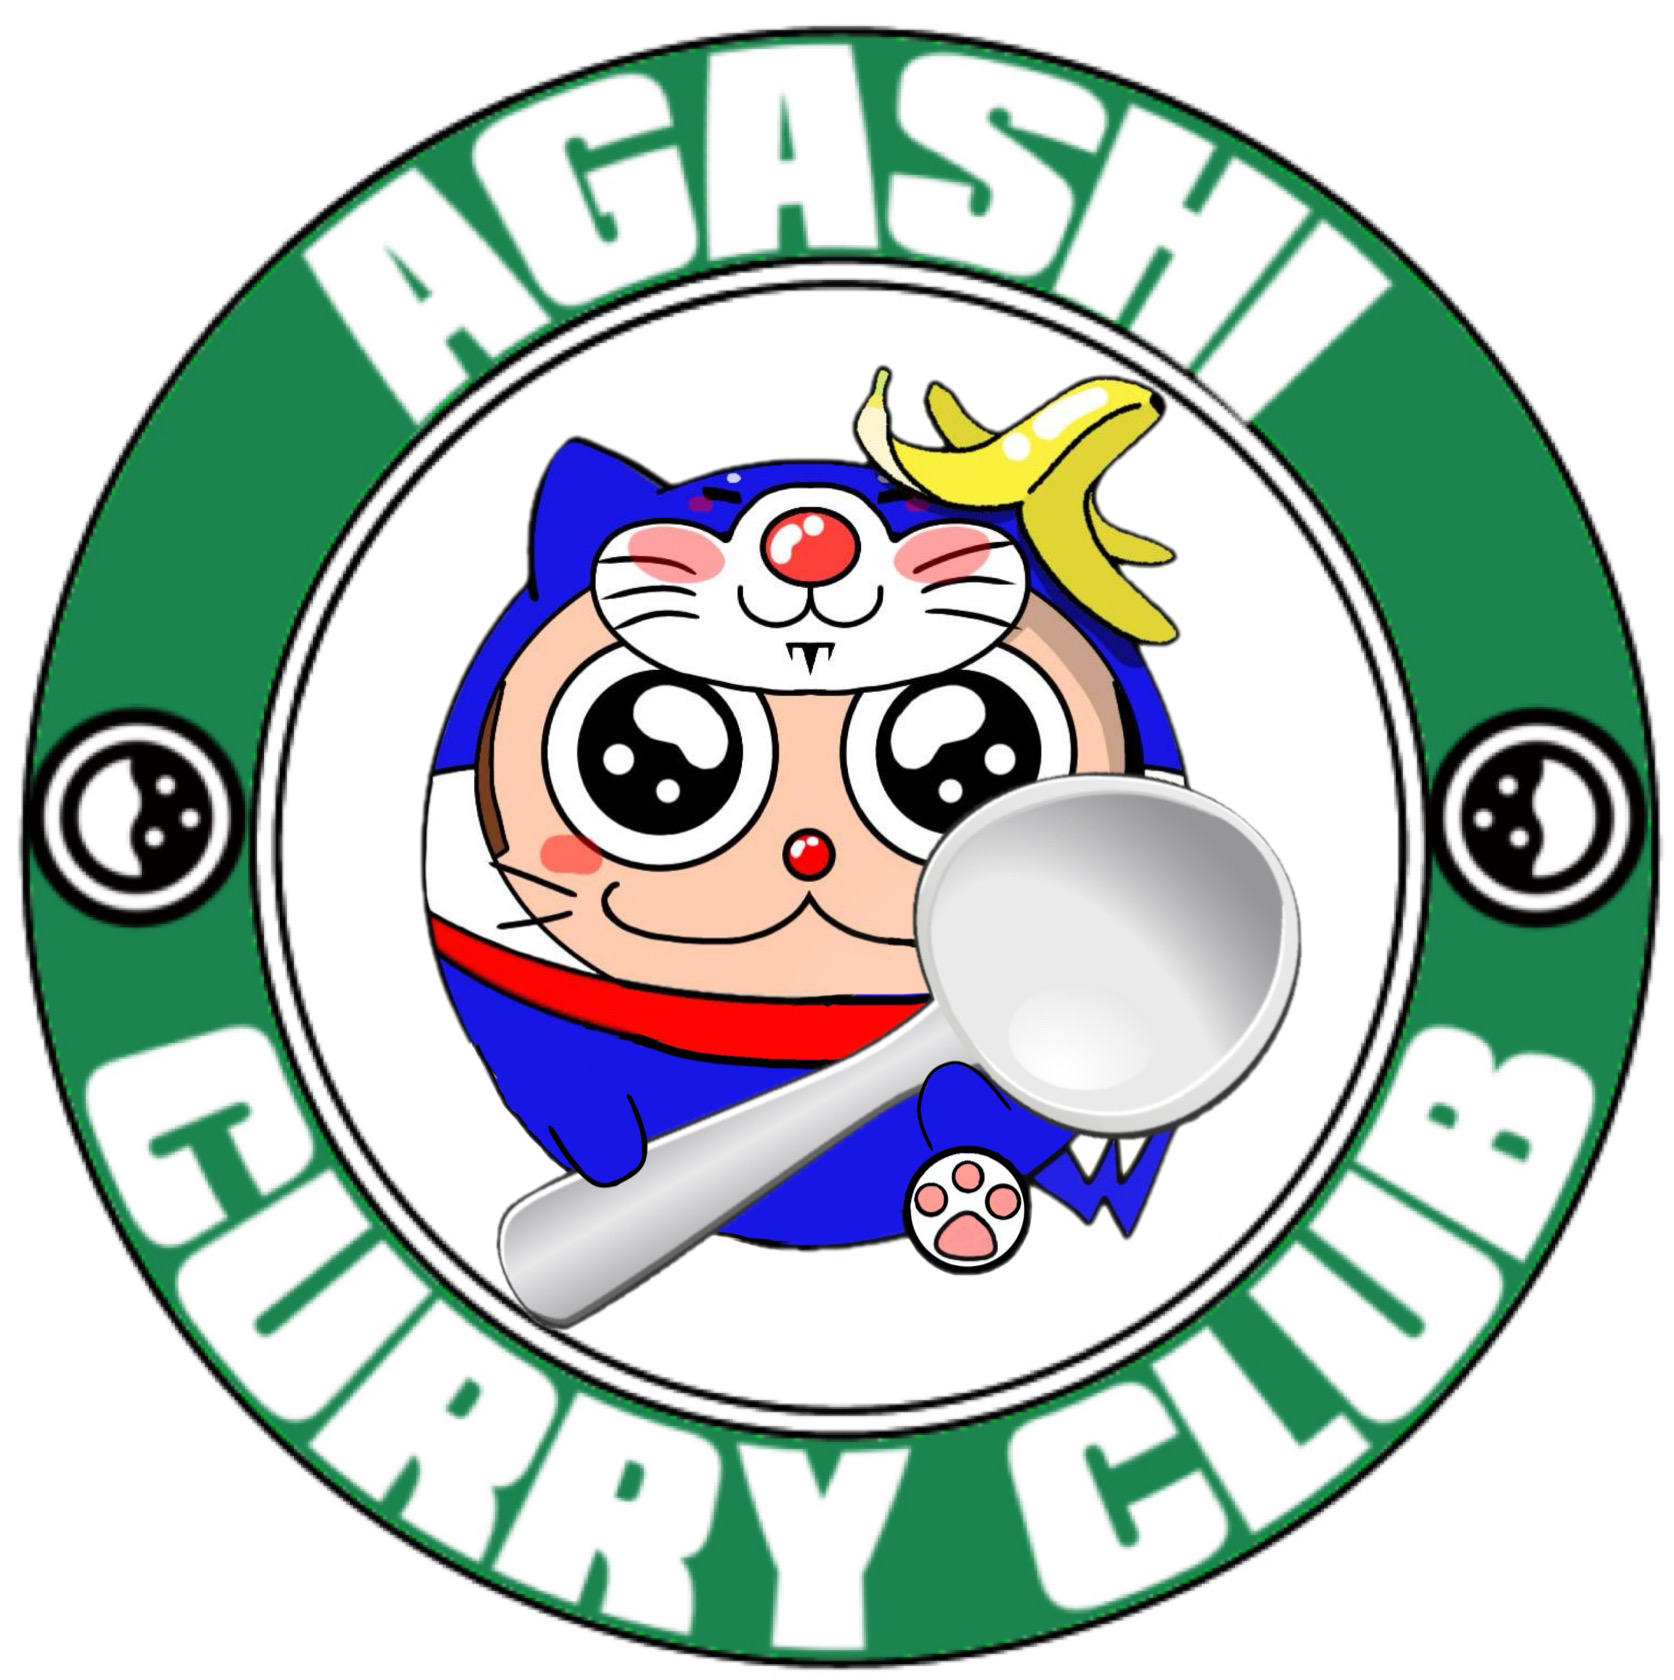 agashiagashi